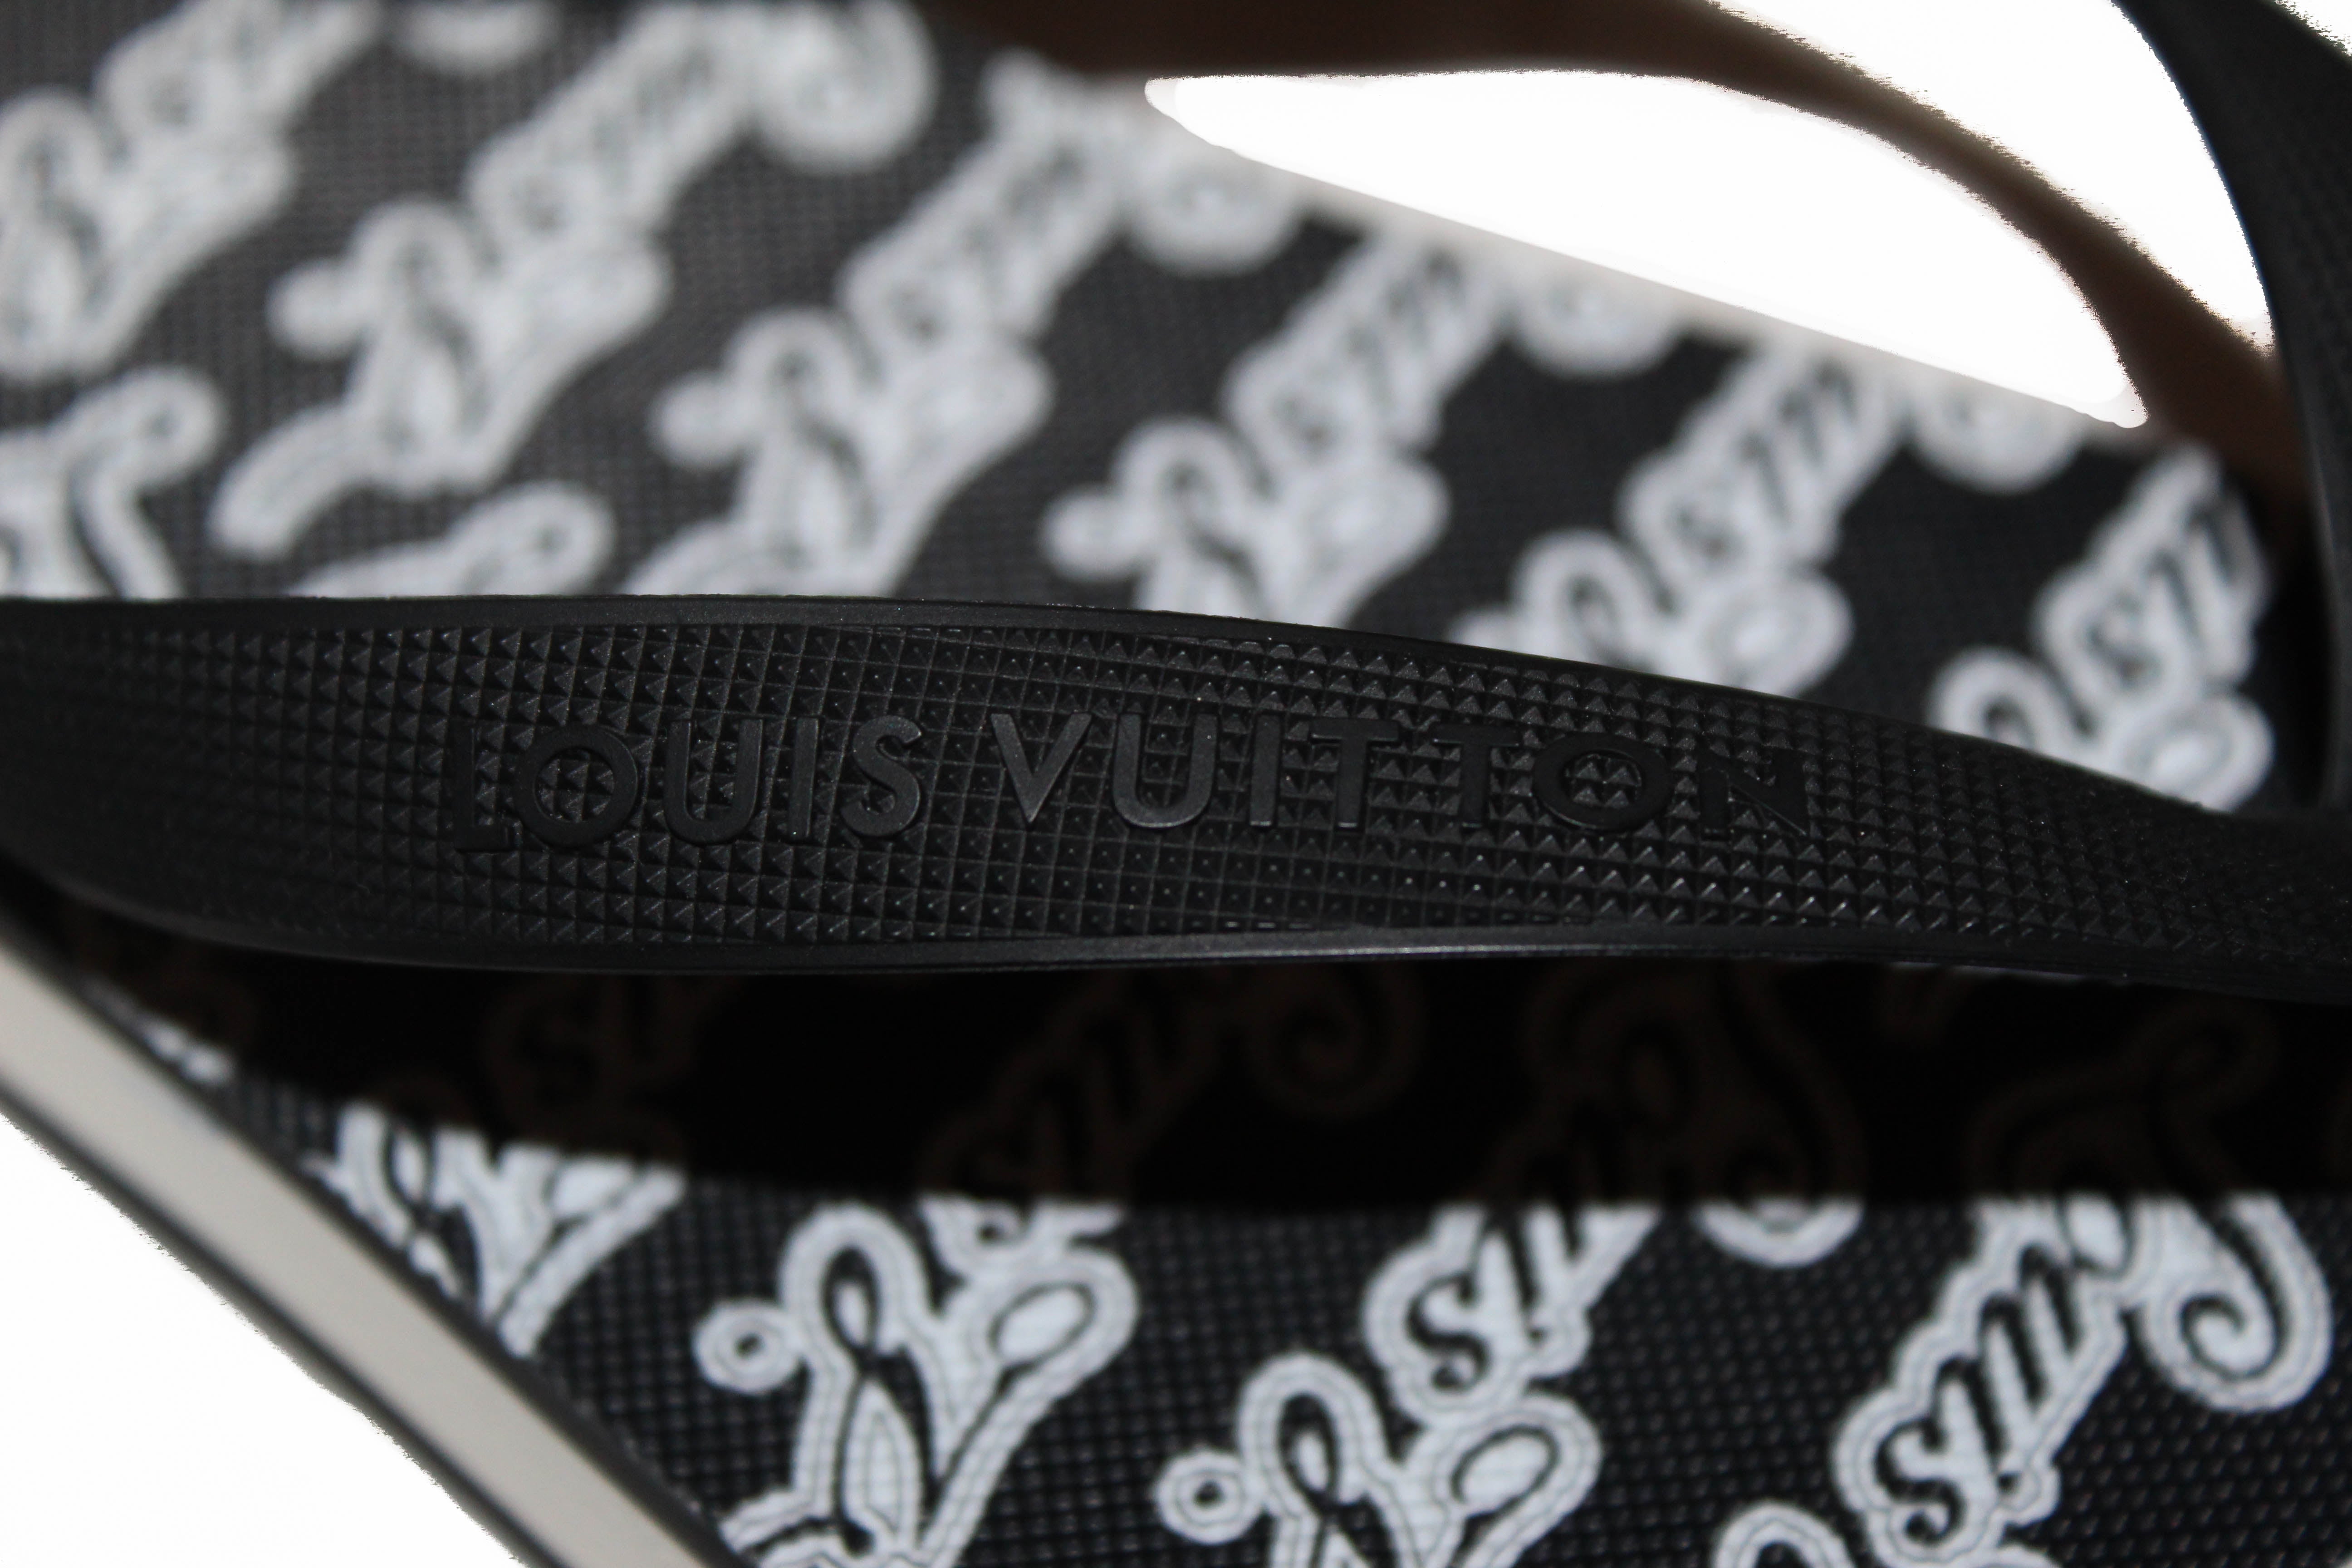 Authentic New Louis Vuitton Black Rubber Mens Molitor Thong Sandals Size 5